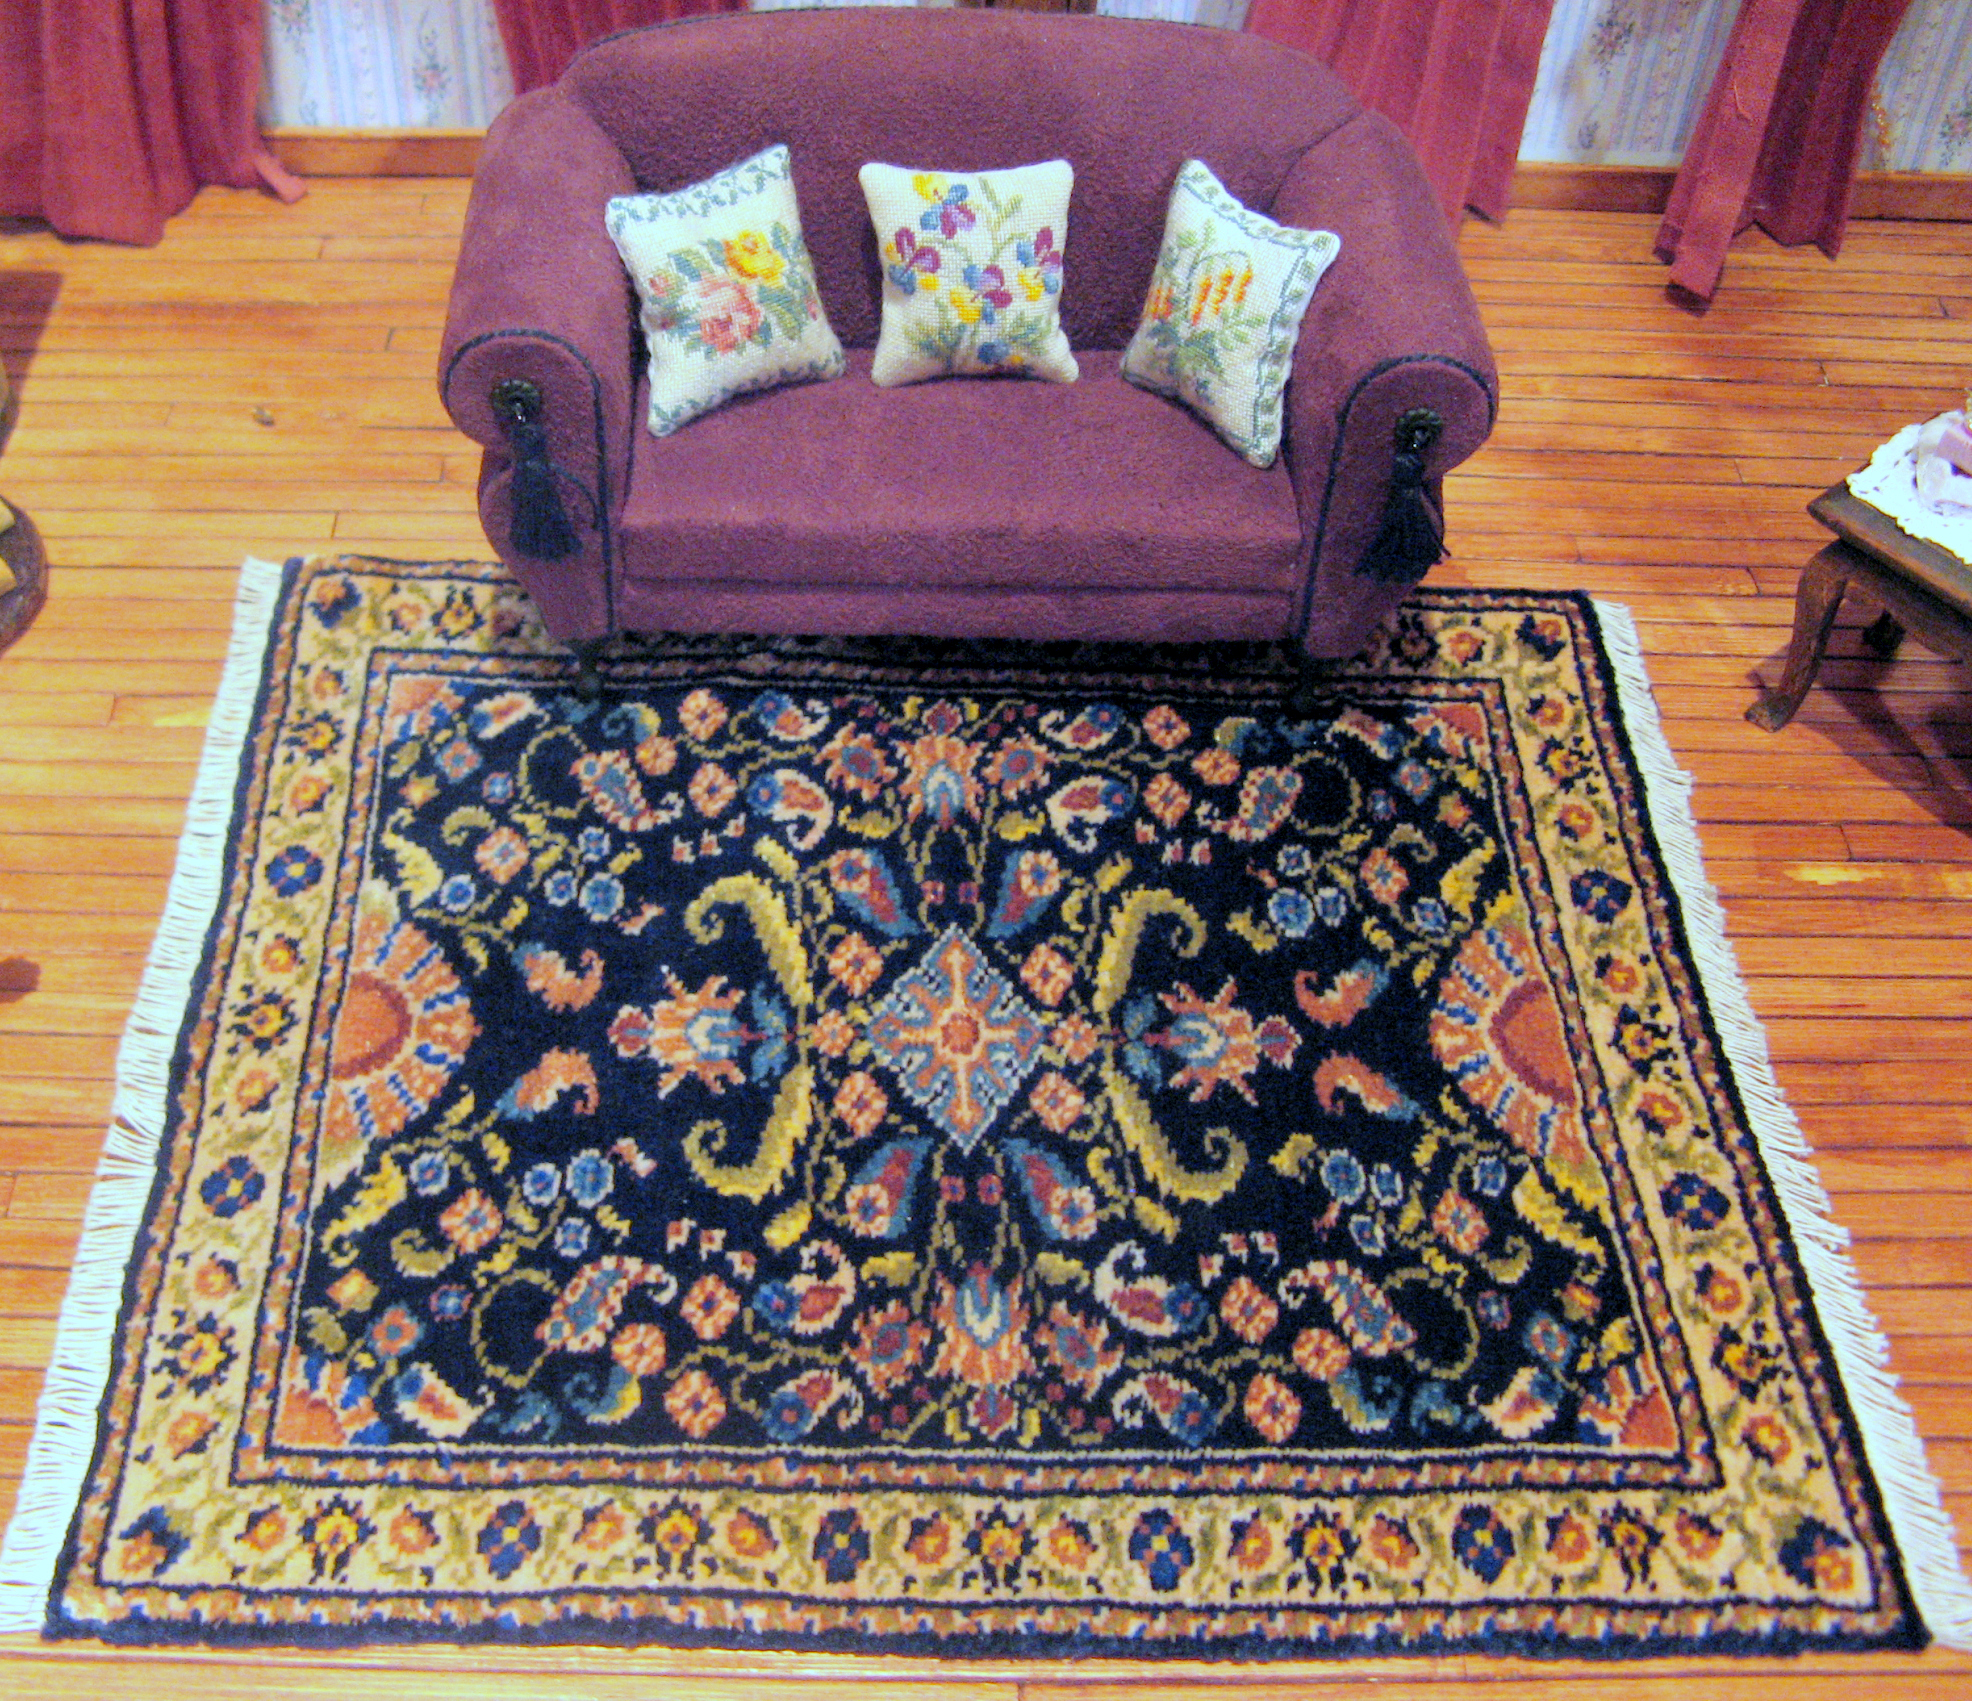 ludwina silk carpet petit point pillows chair made in Kari bloom workshop